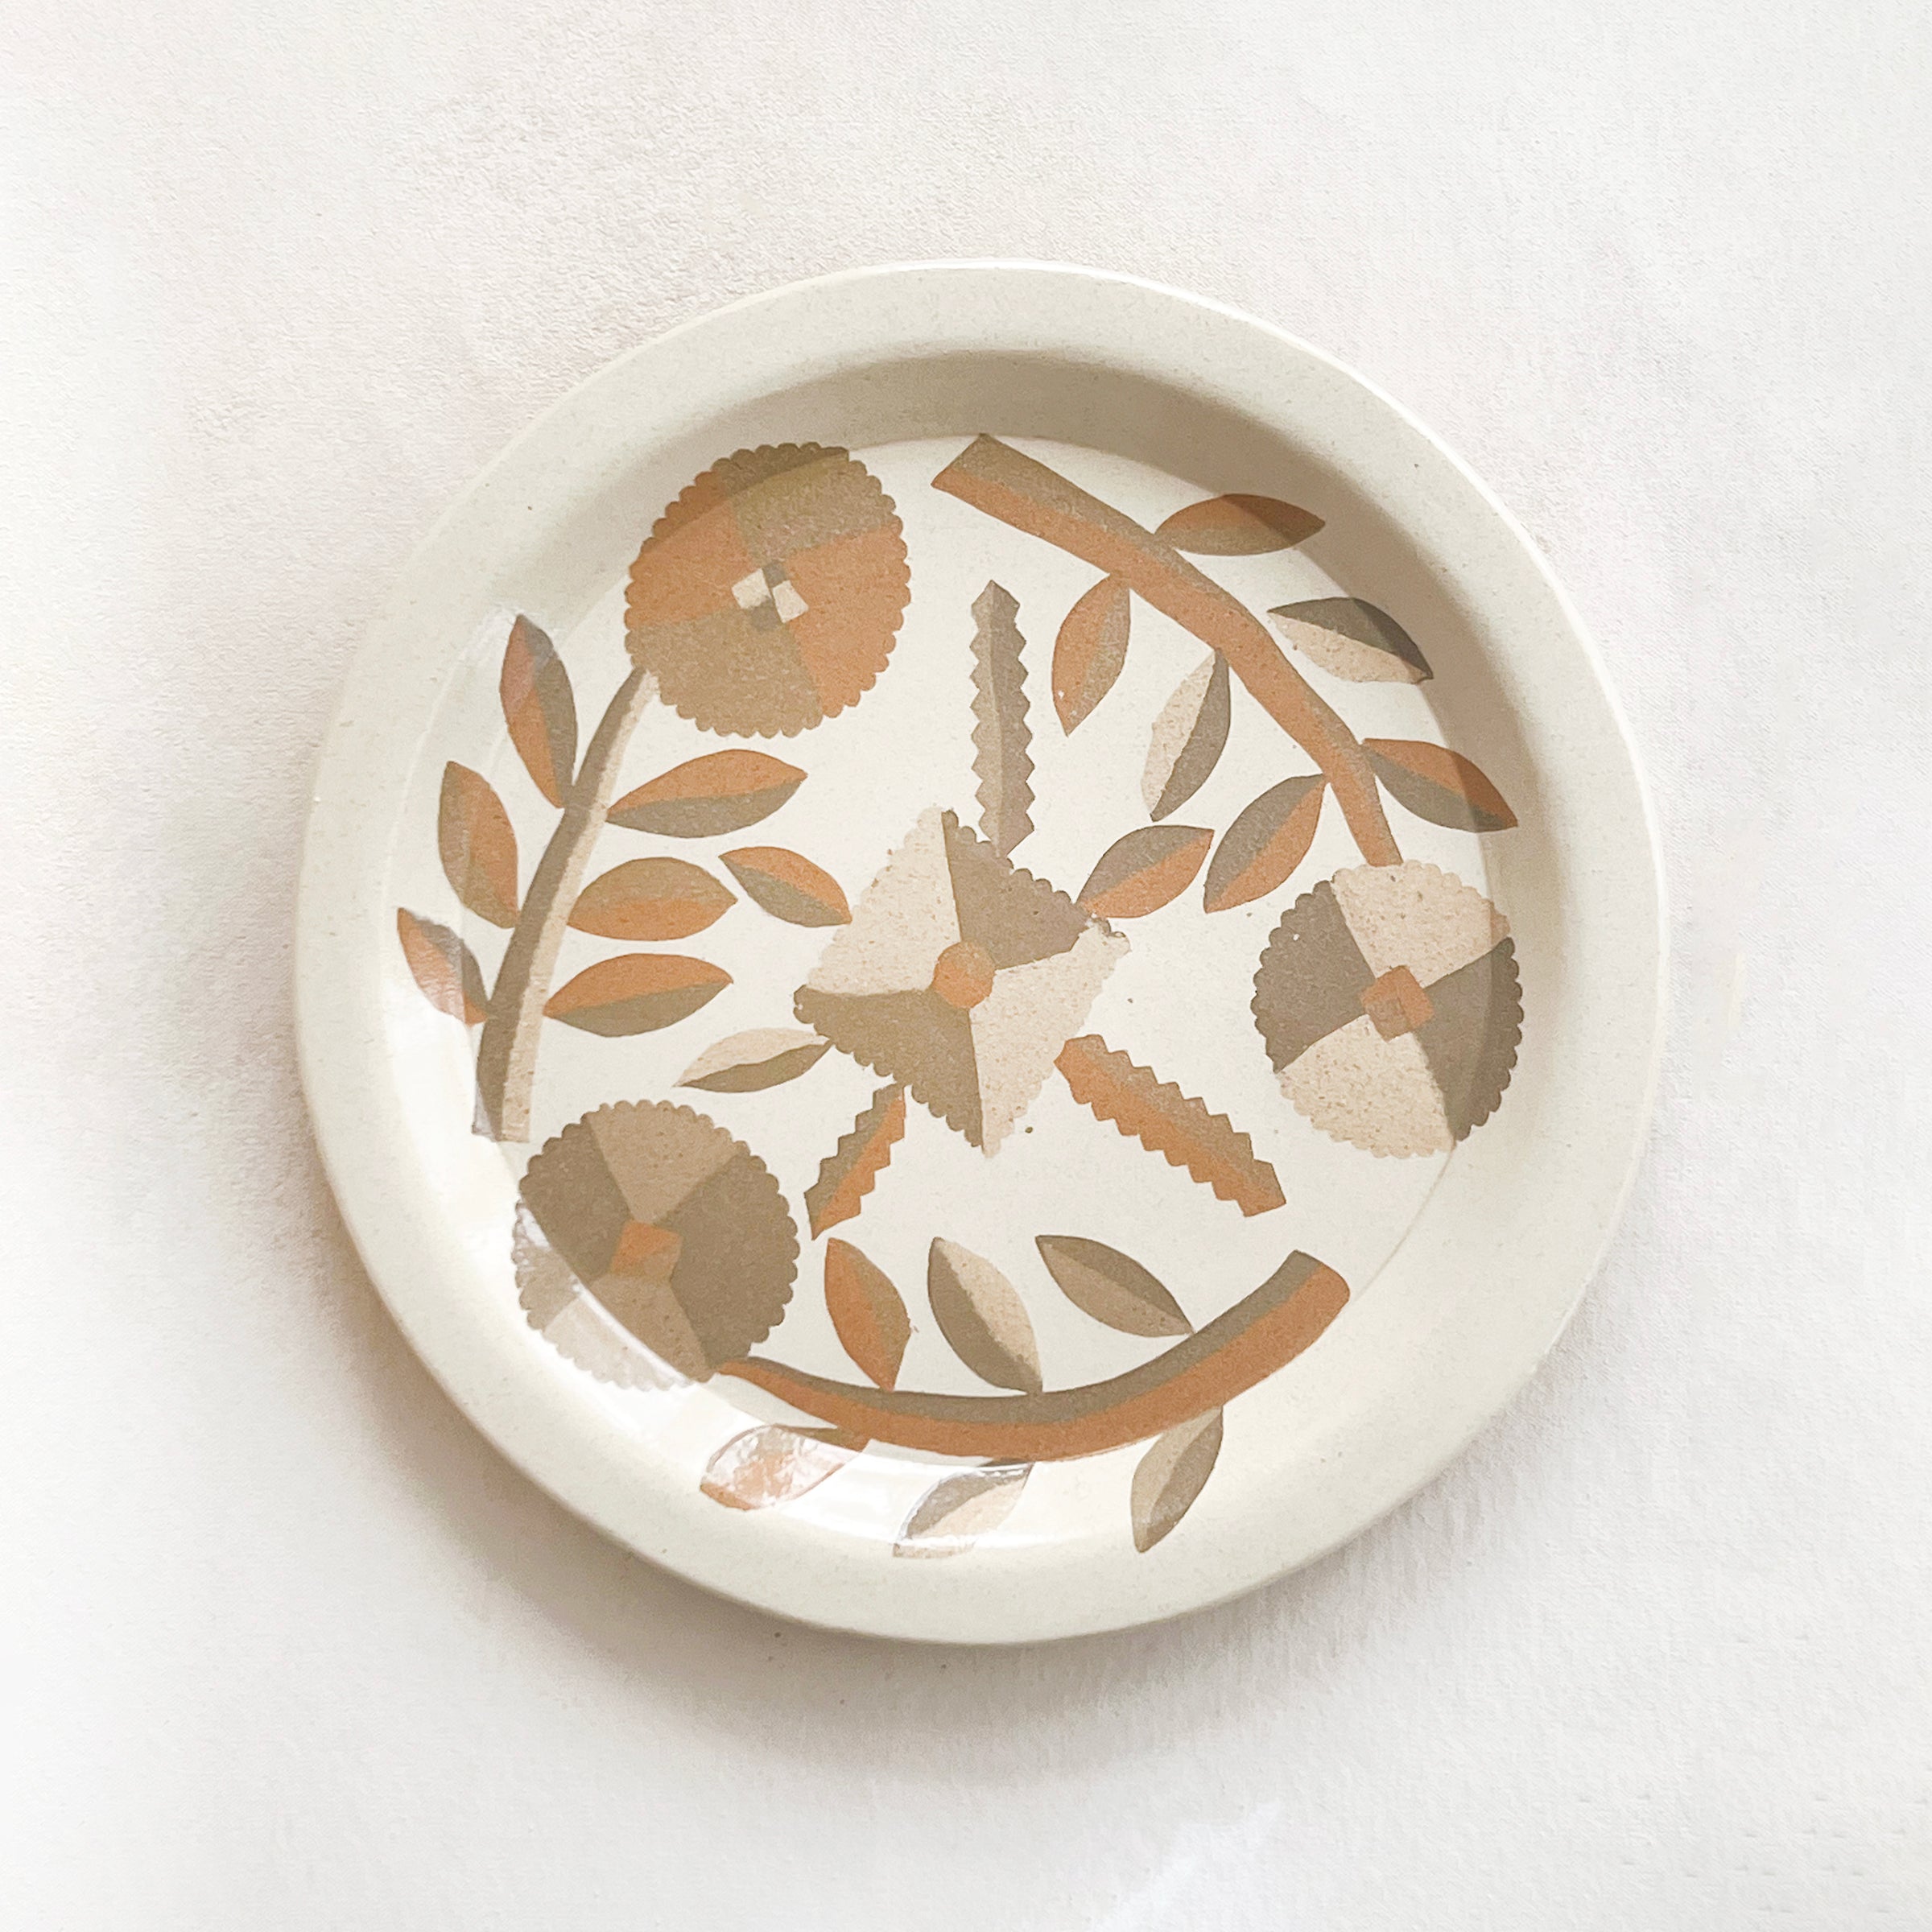 Inlayed Ceramic Plate